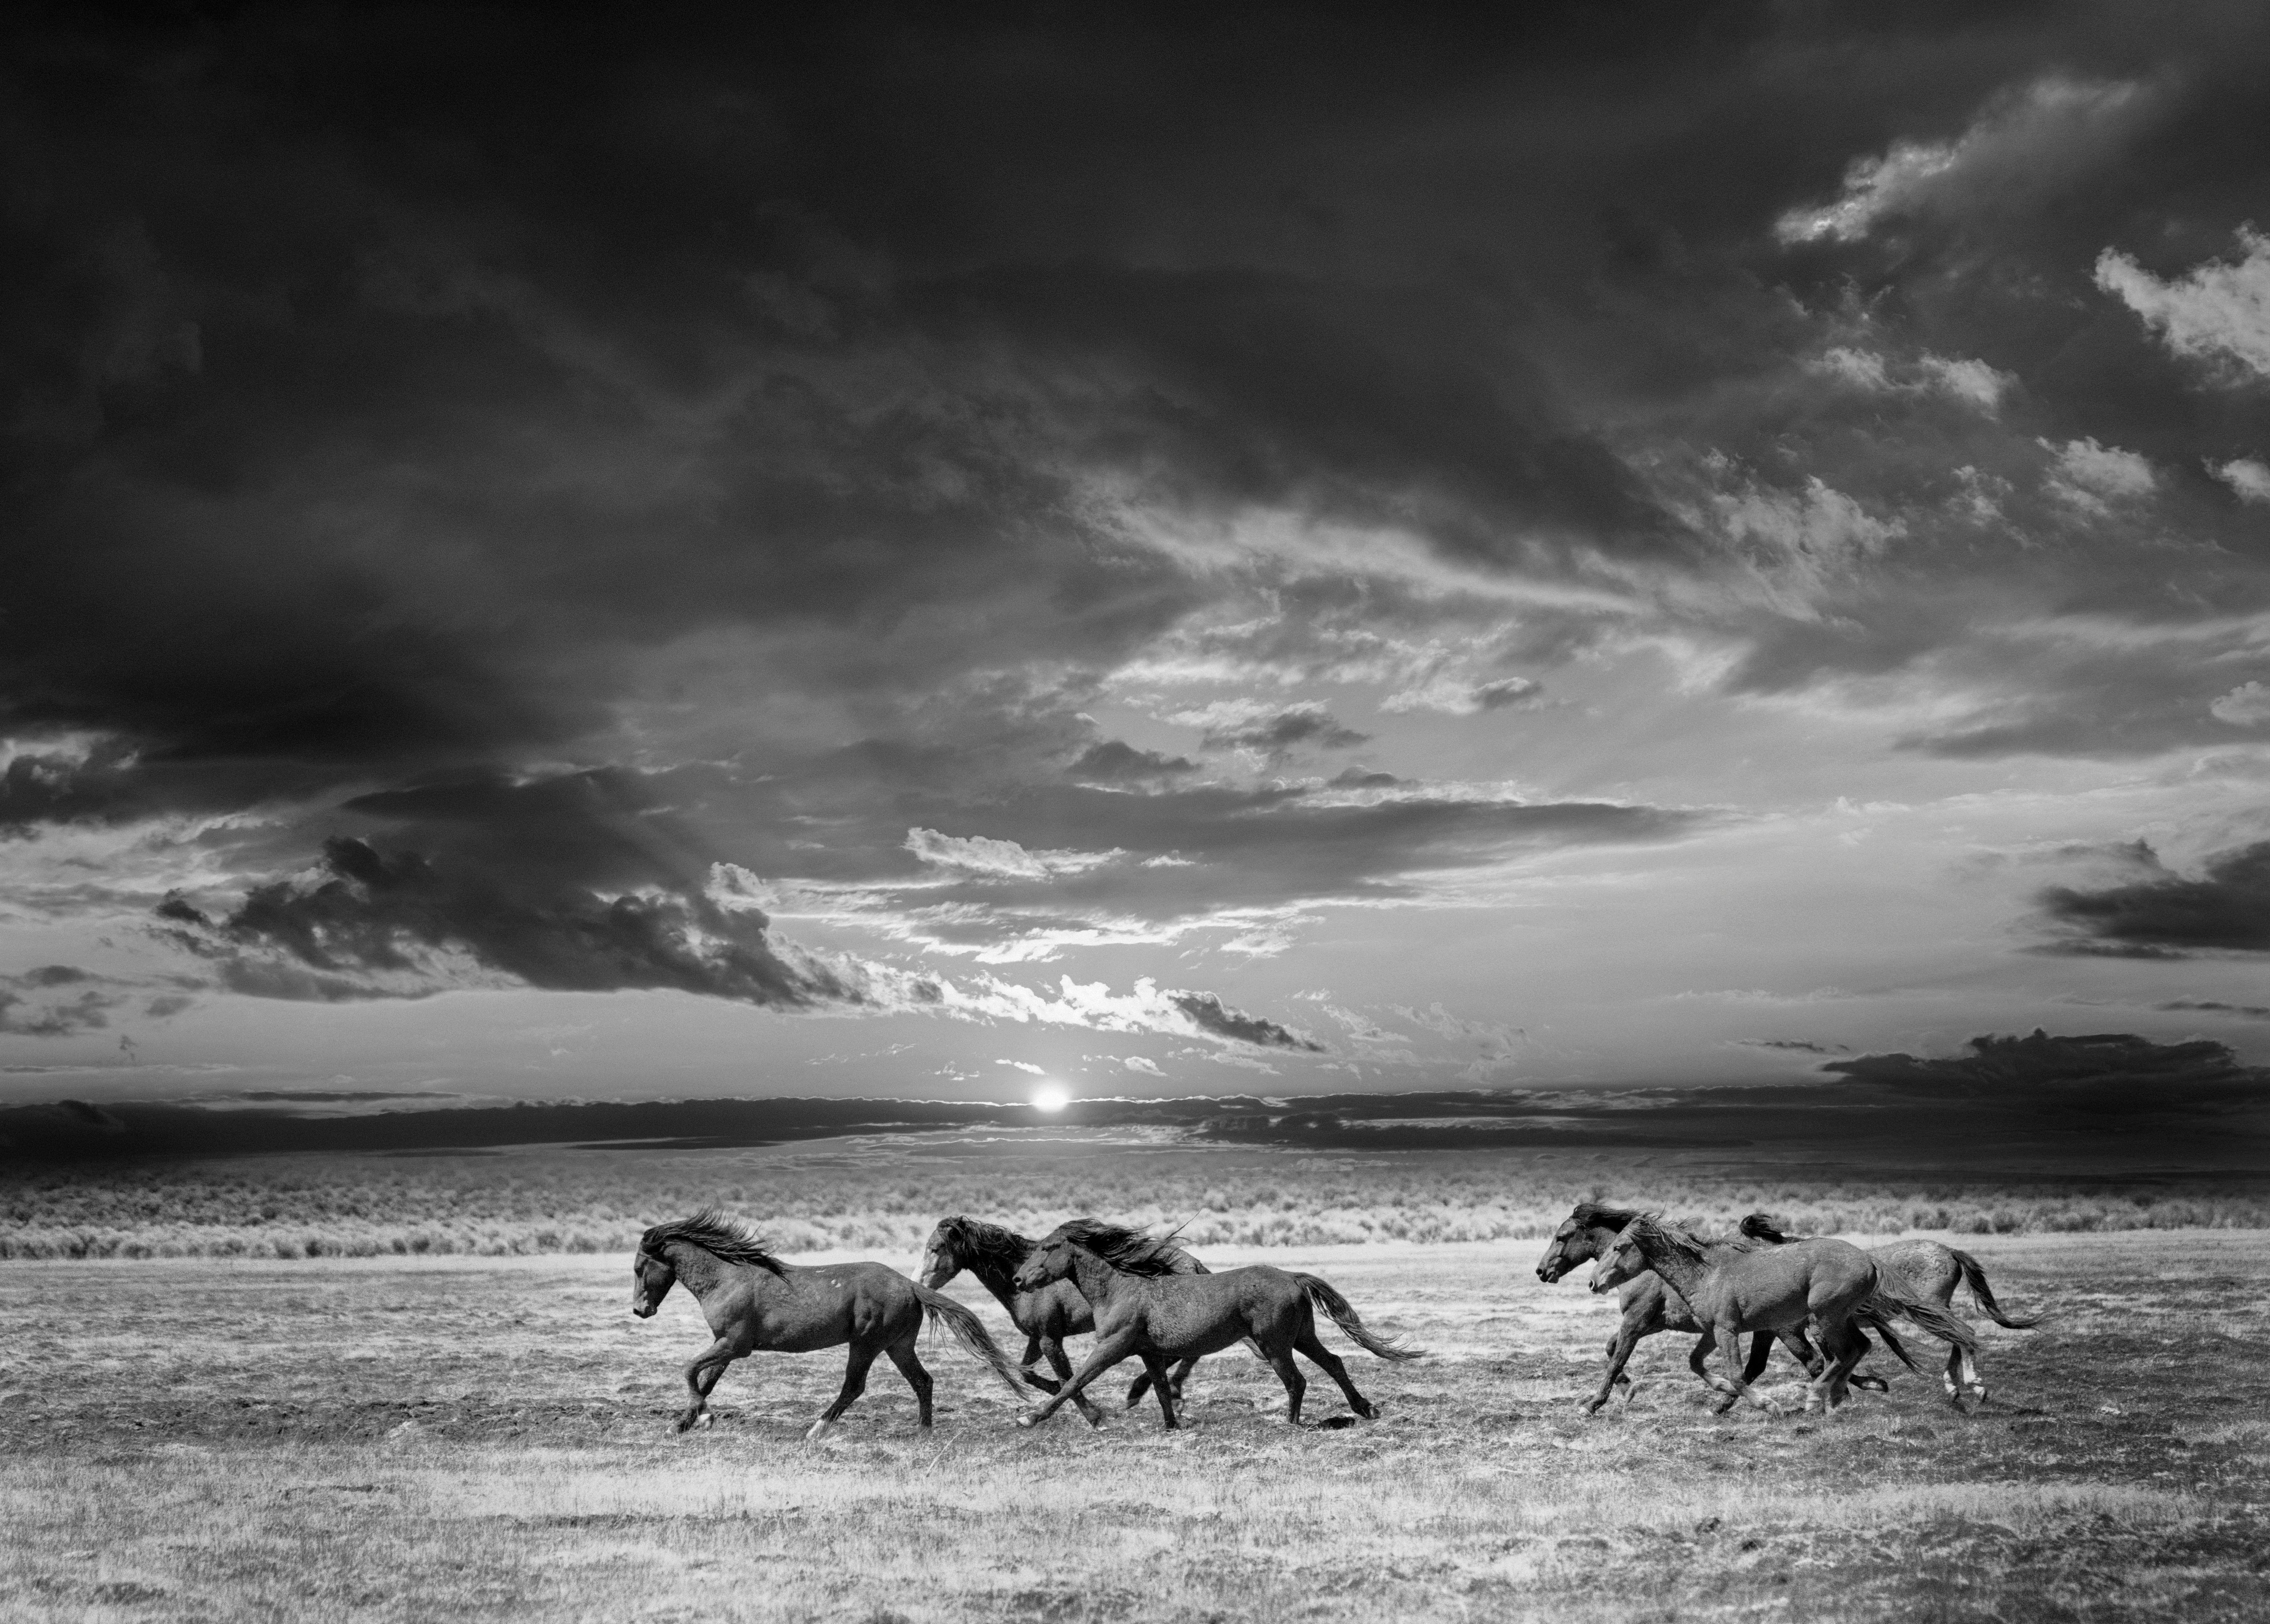 Shane Russeck Animal Print -  "Chasing the Light" 40x50 Photography Wild Horses Mustangs Photograph Print Art